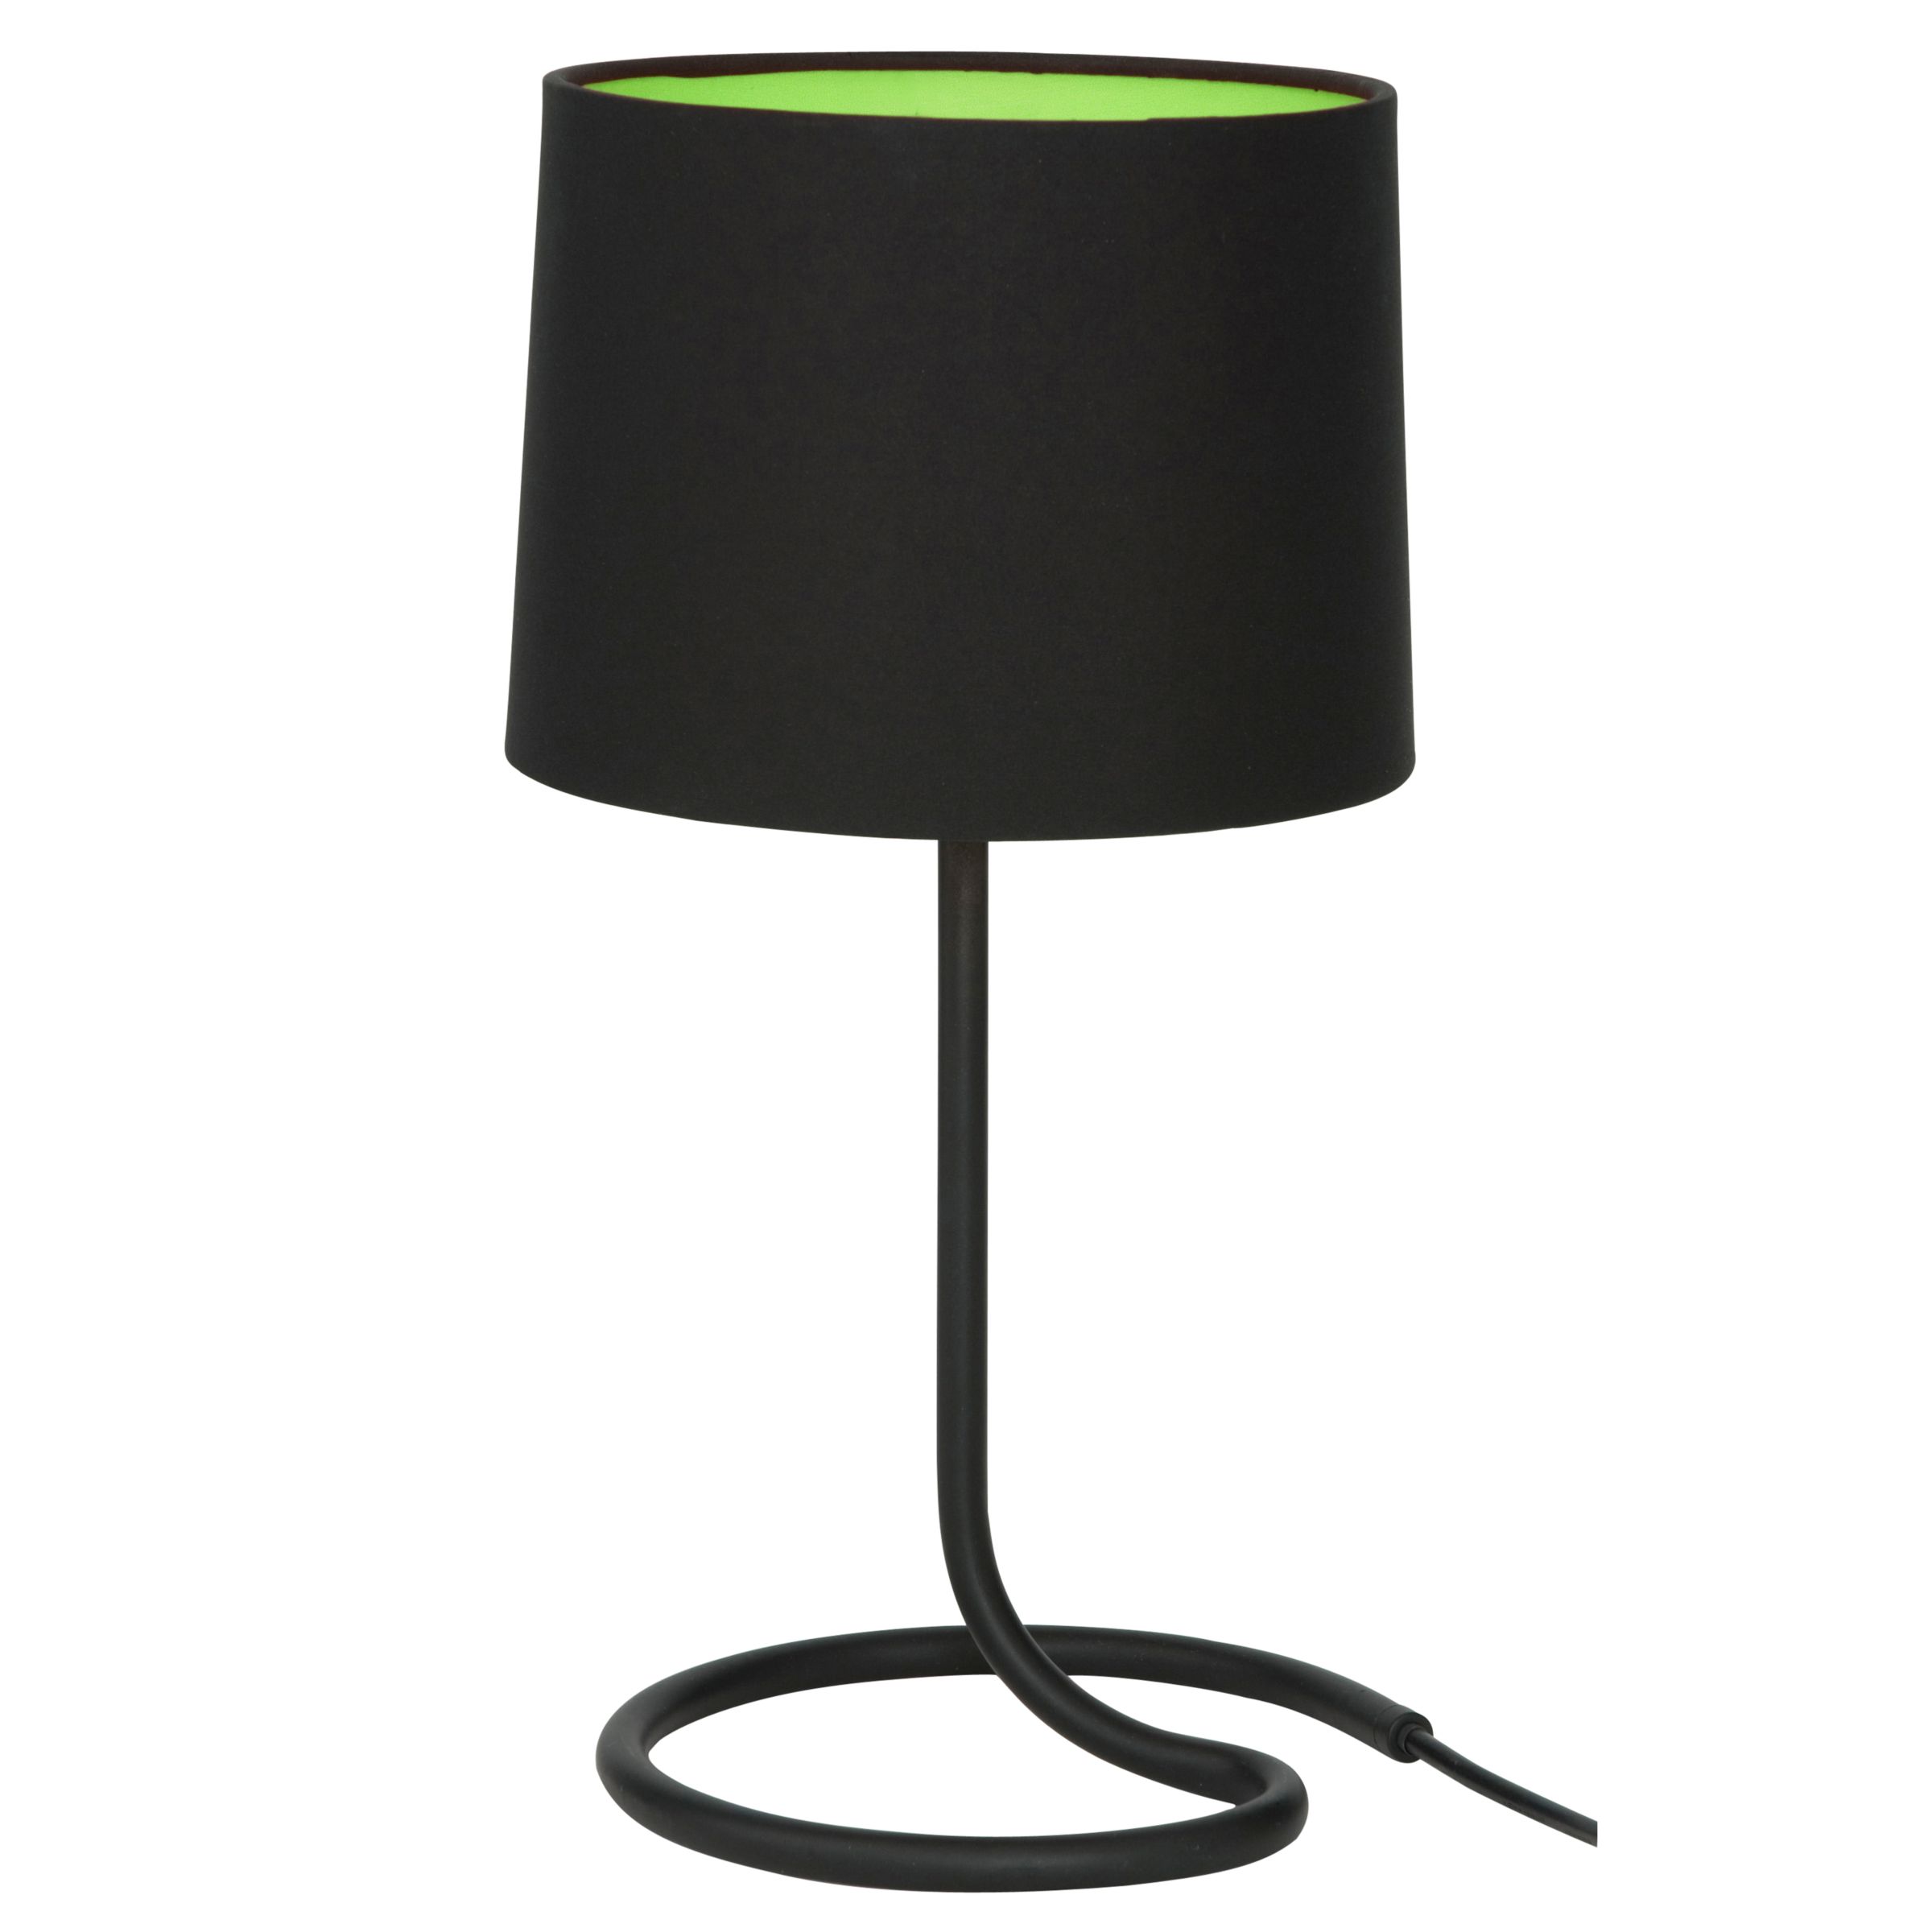 John Lewis Hollie Table Lamp, Green / Black